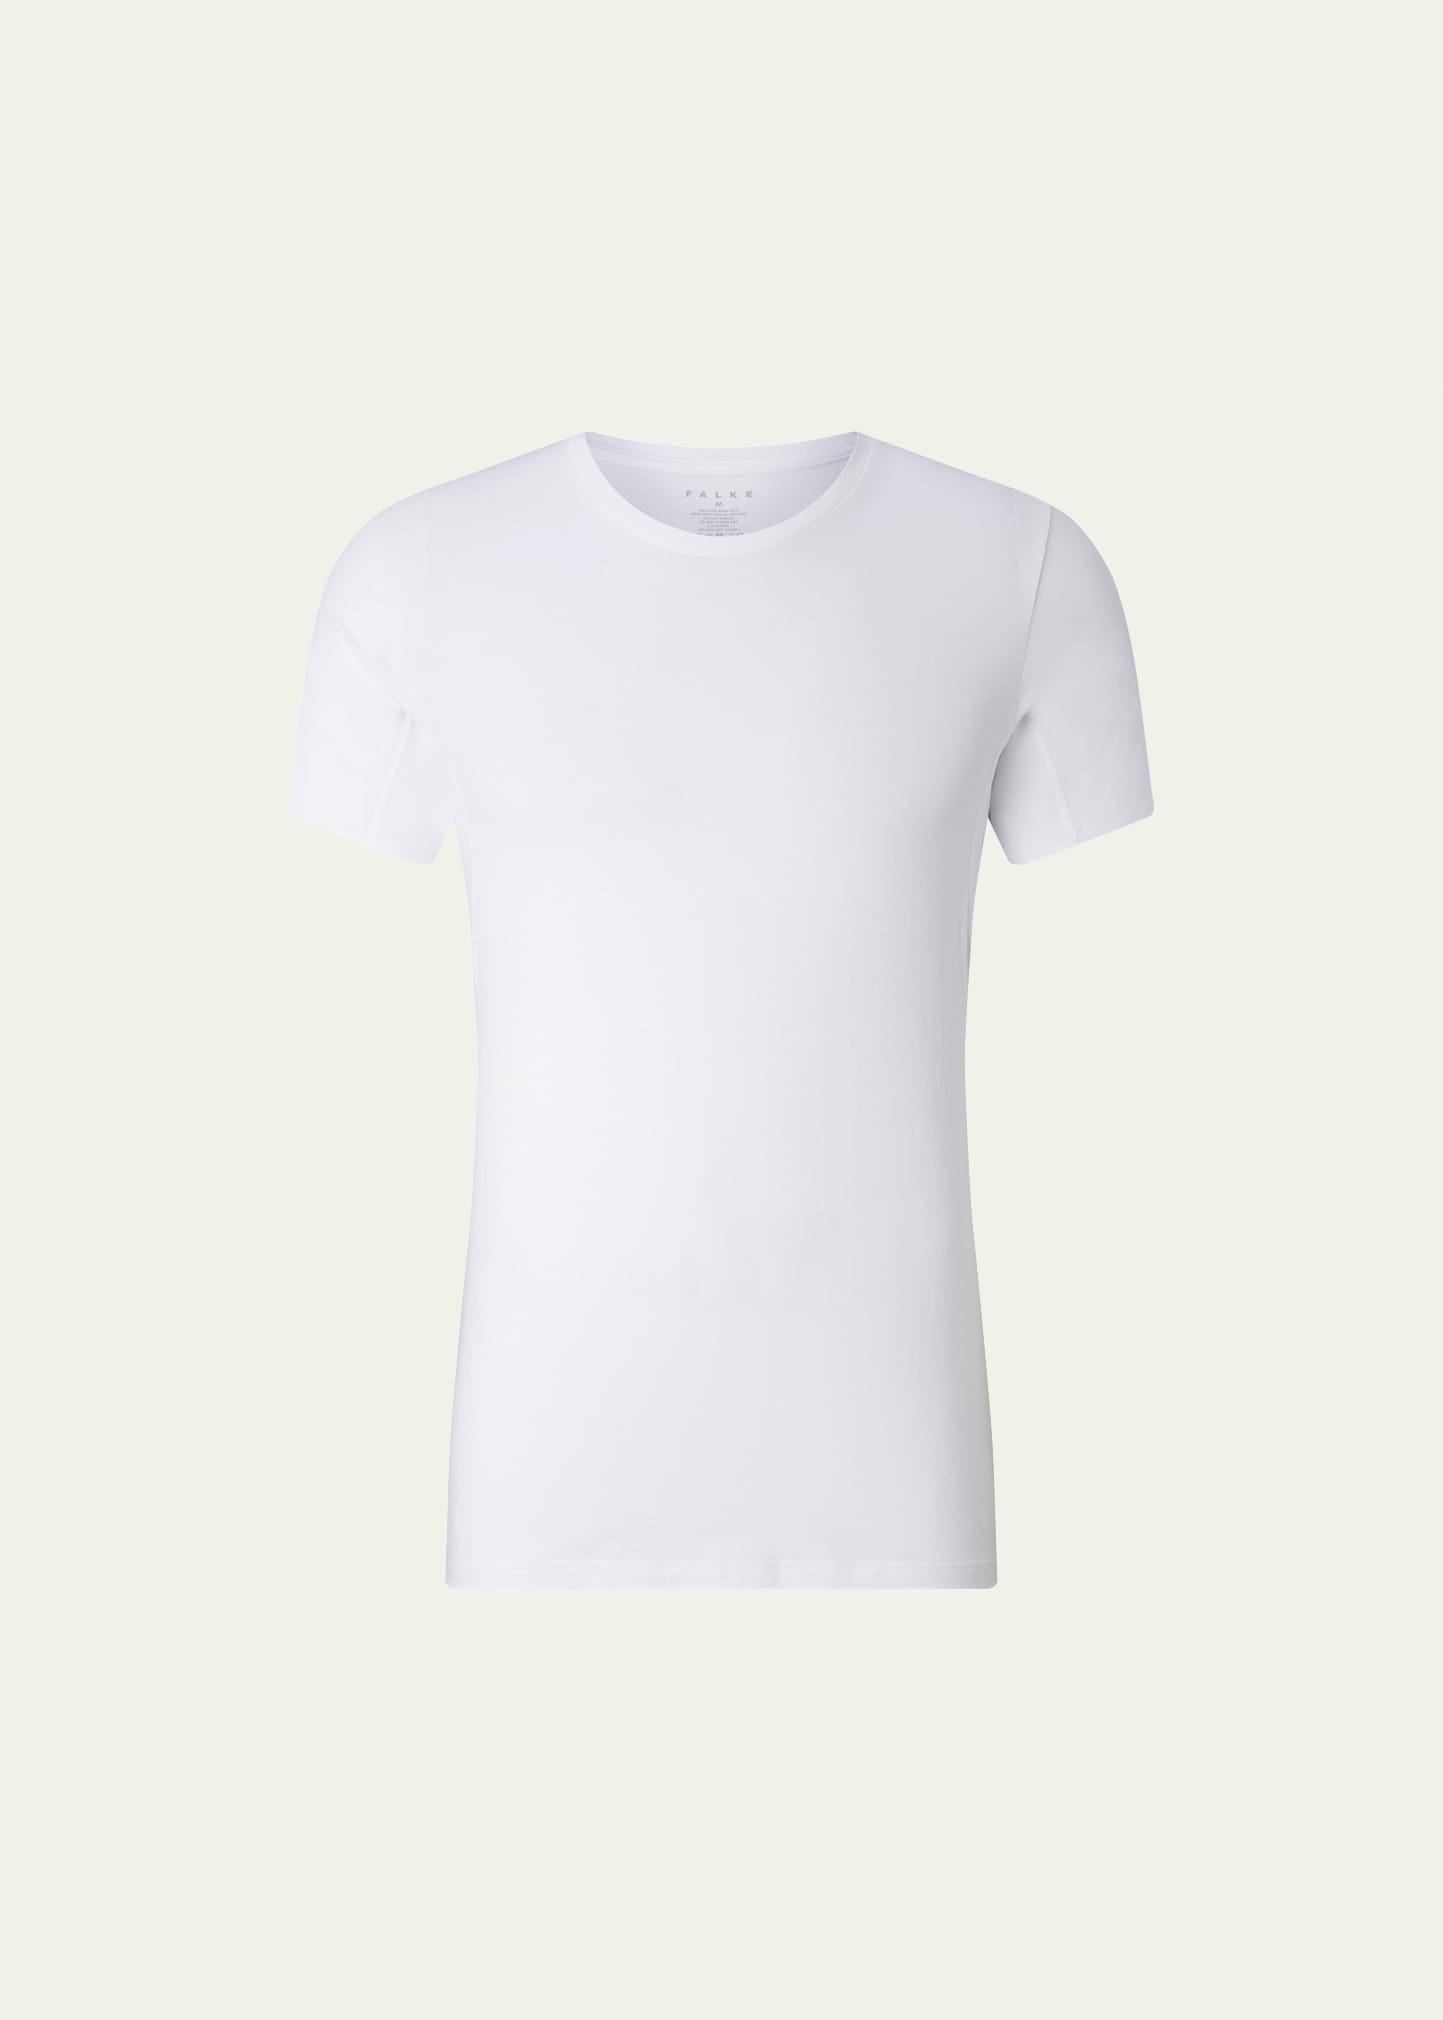 Falke Men's Cotton-stretch Crewneck T-shirt In White